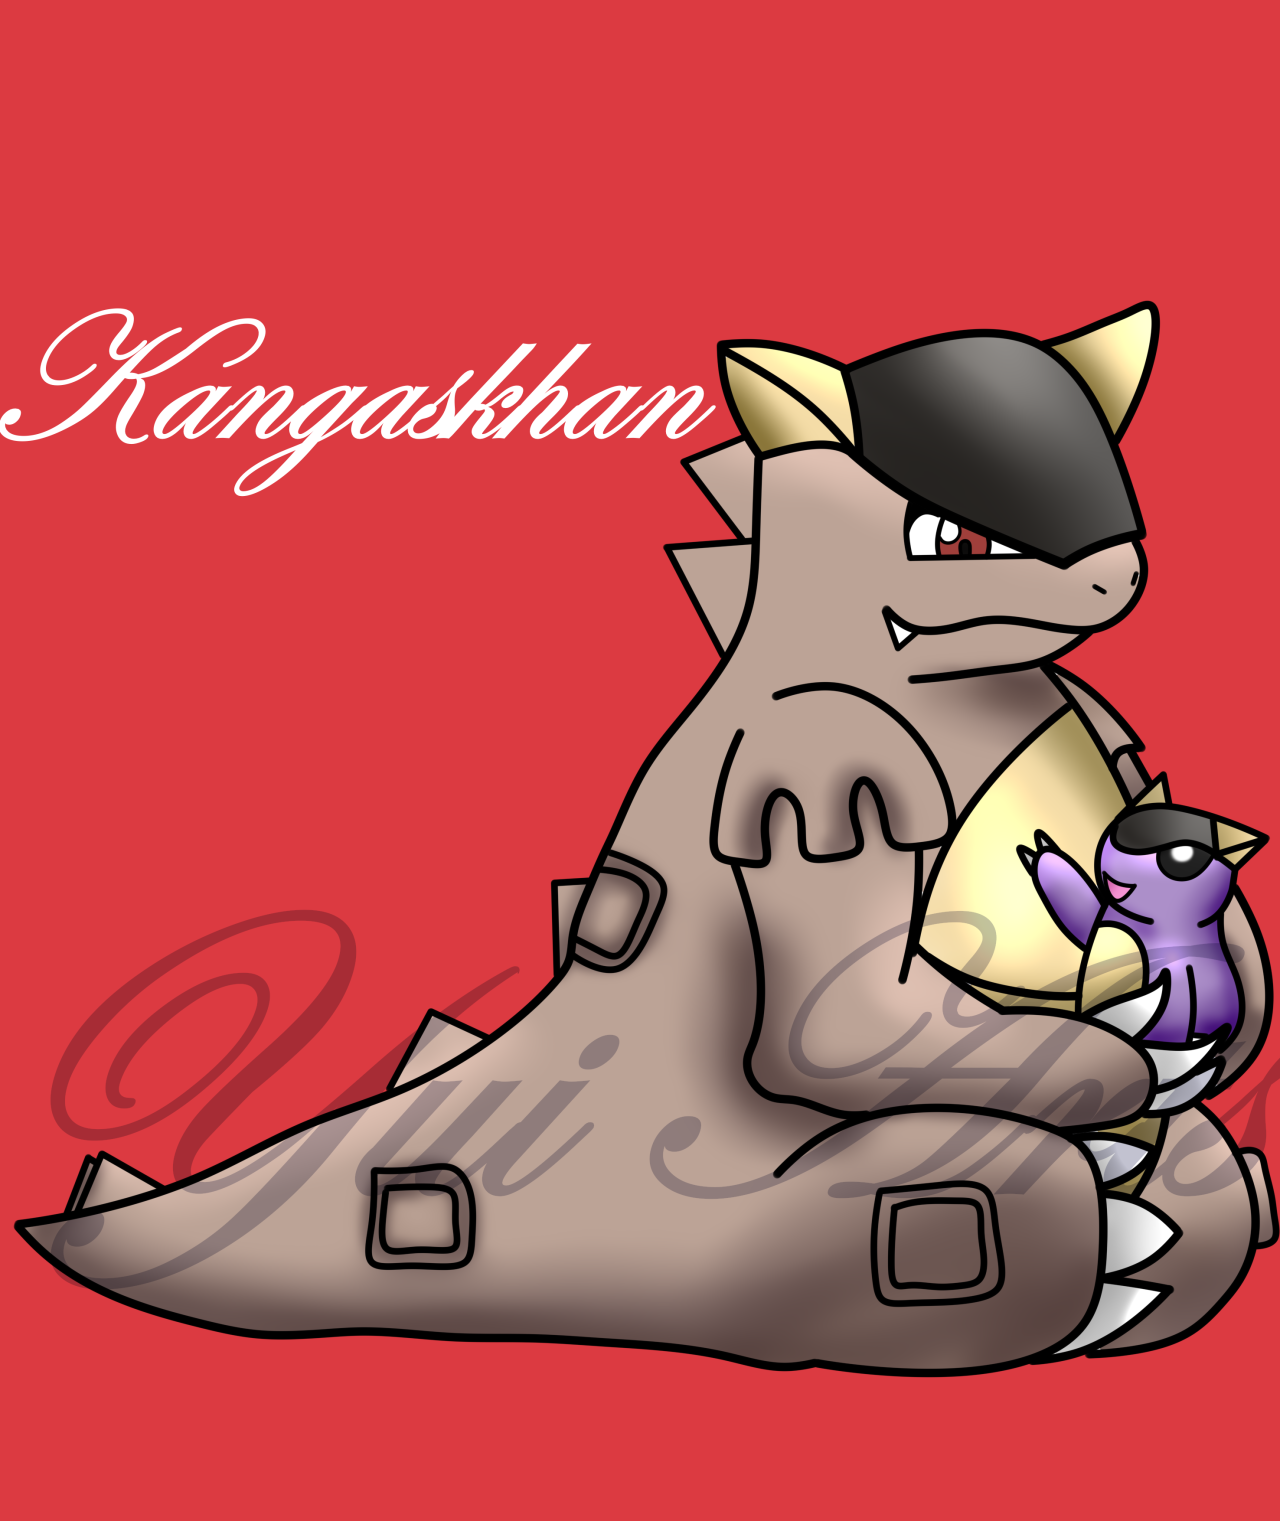 115 Kangaskhan - Mega Kangaskhan [OC] : r/pokemon